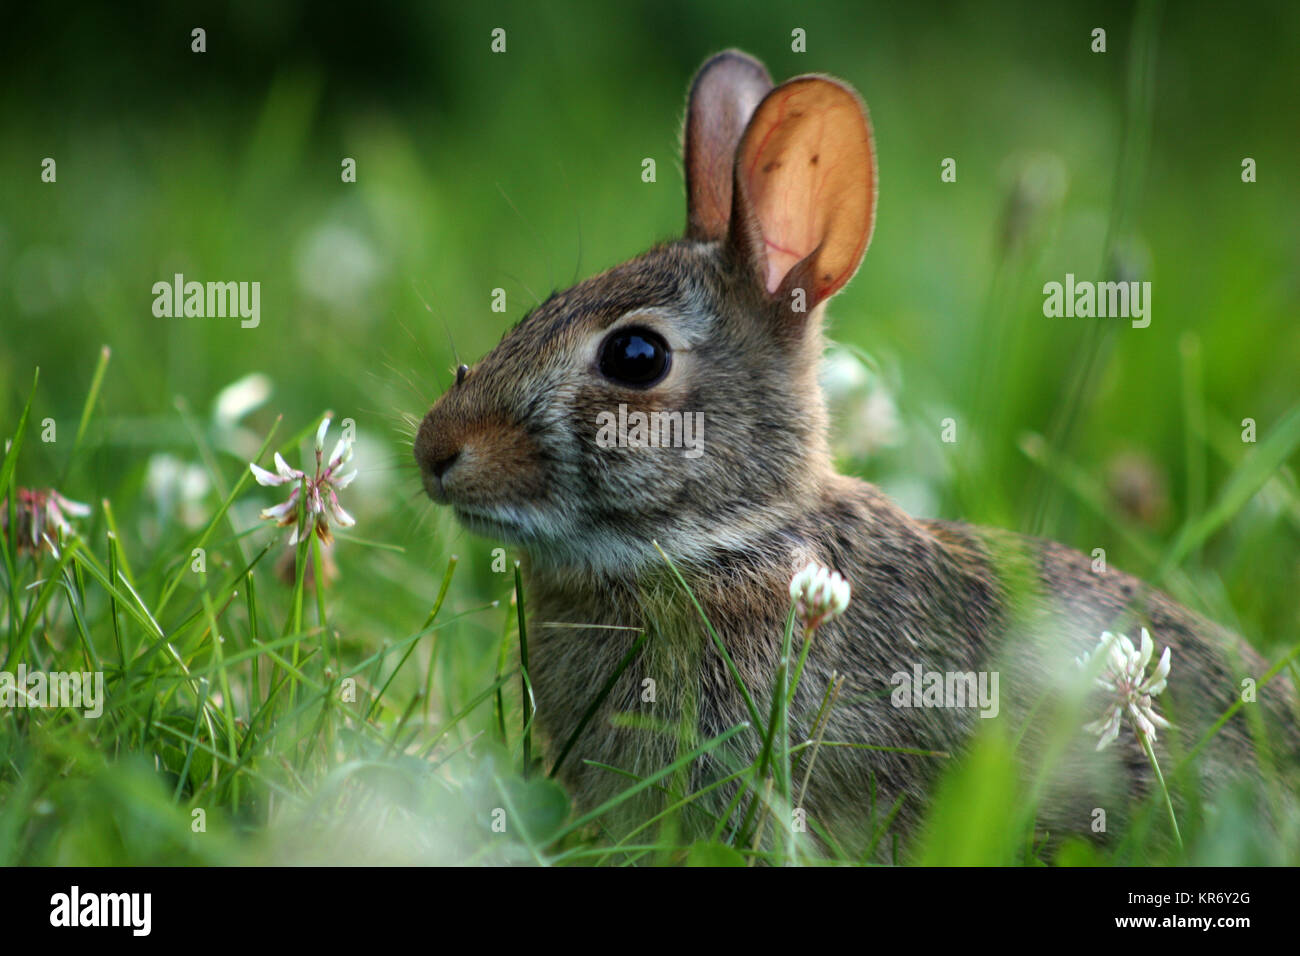 Pennsylvania, USA. Close-up of wild rabbit with tick on nose. Stock Photo